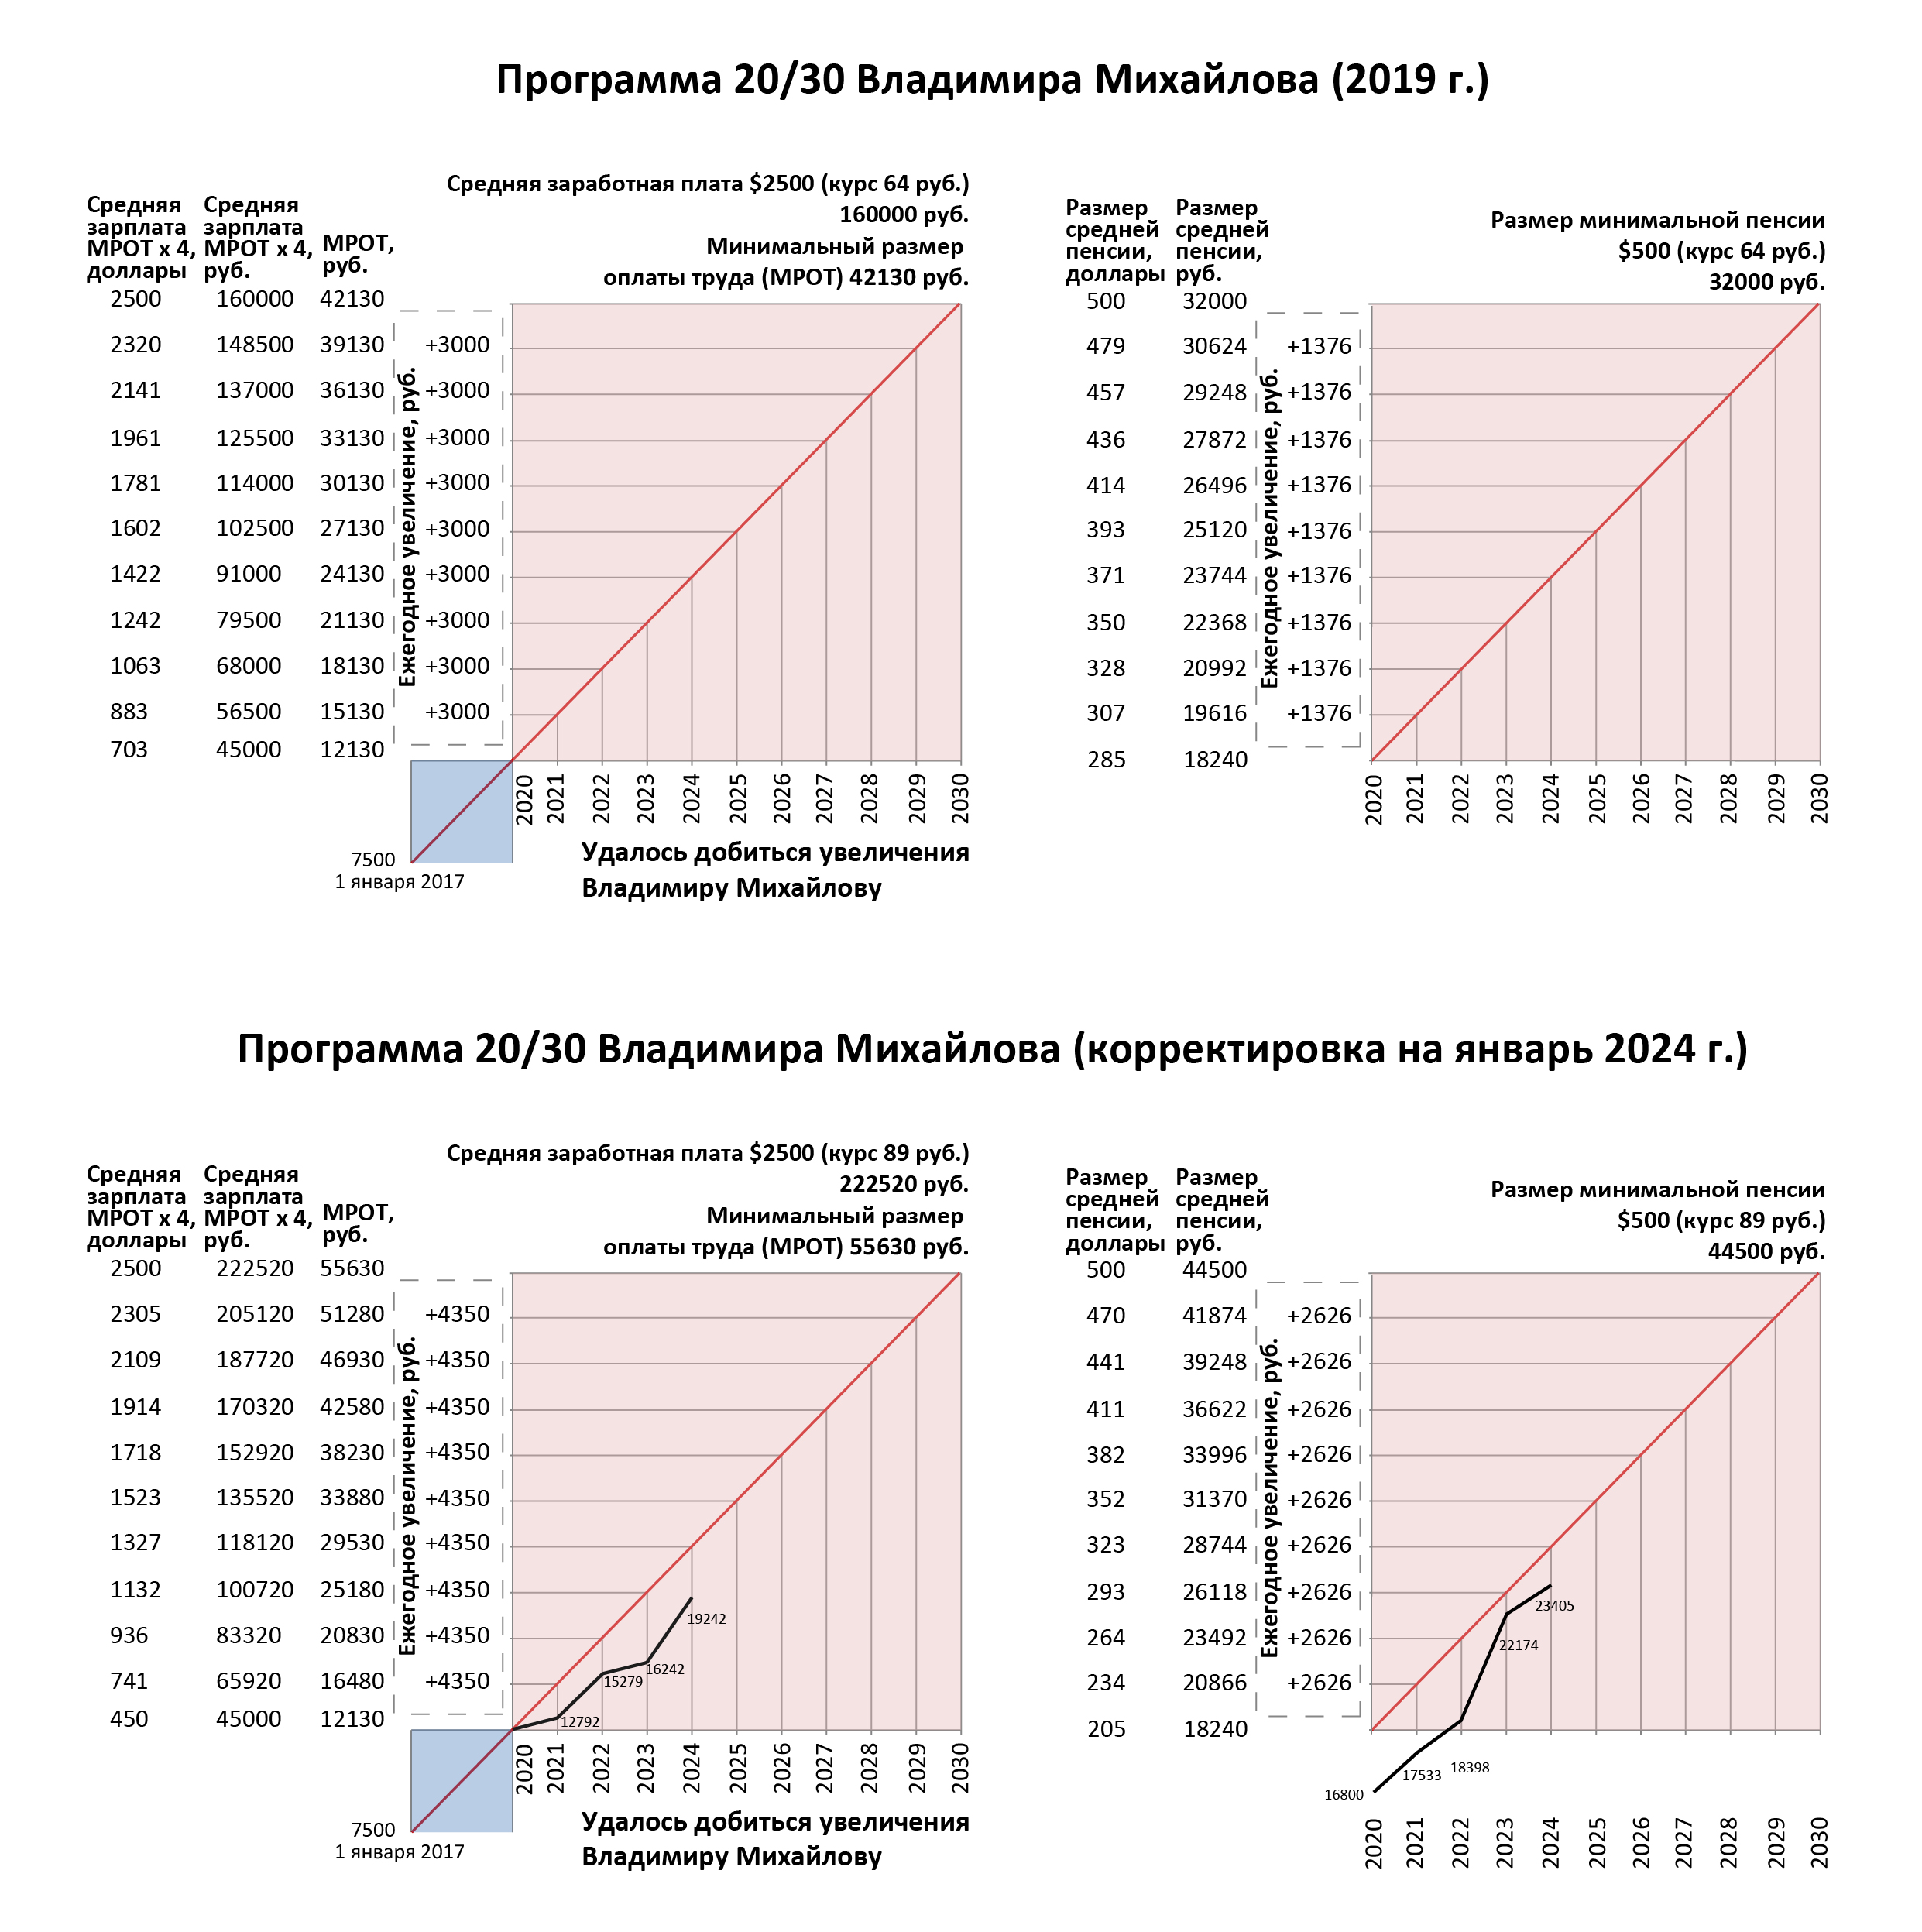 Программа В. Михайолова 2019 г., корректировка на 2024г.